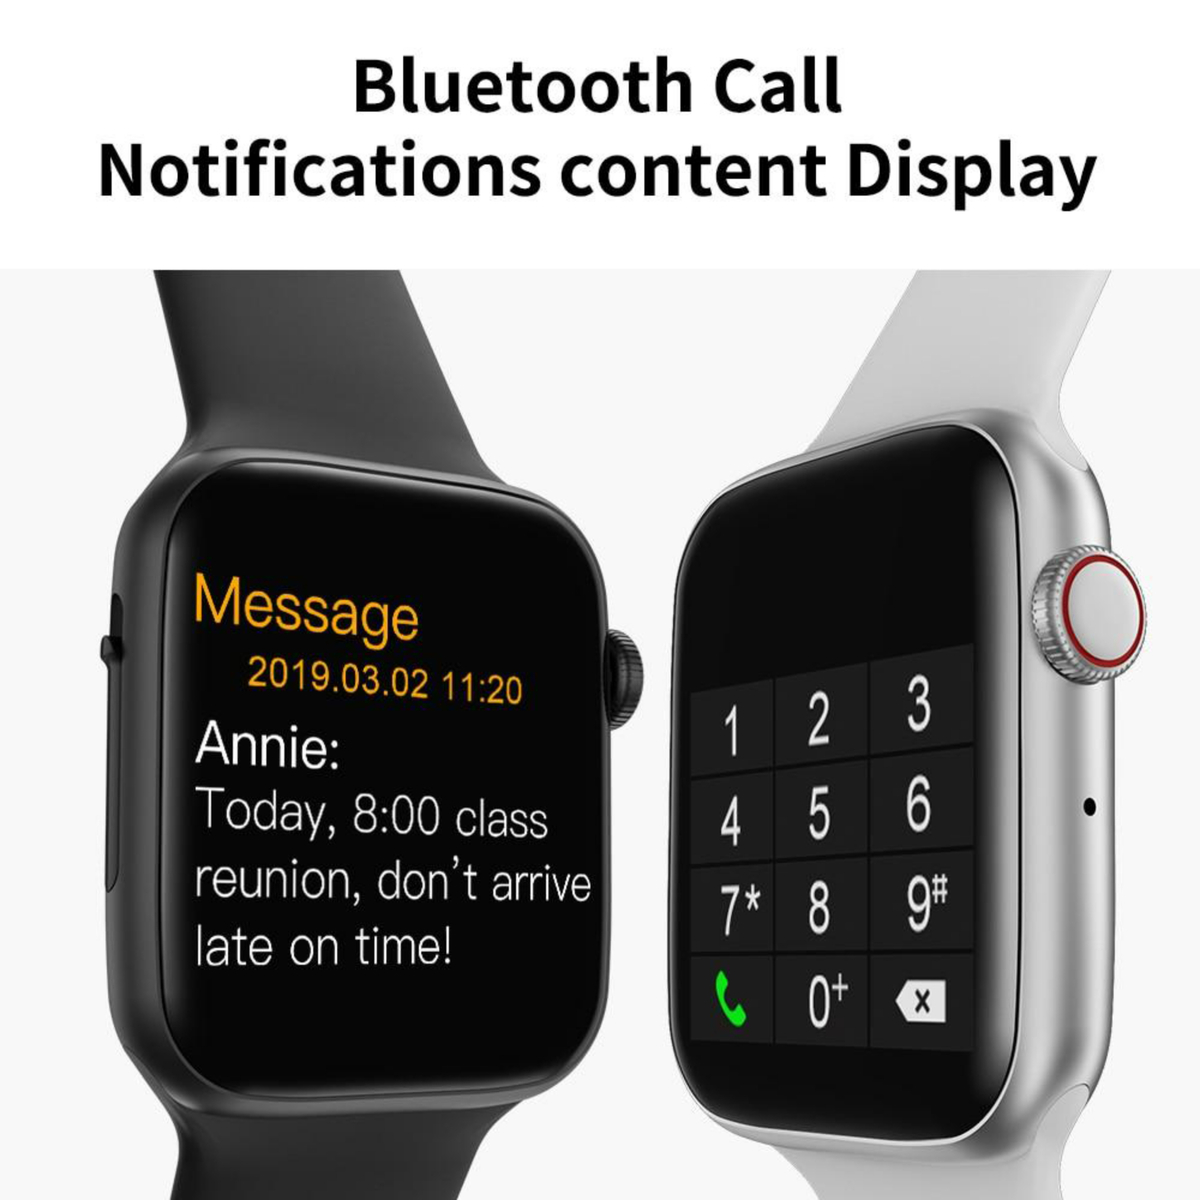 ISmart 1.62 Inches Full Screen Smart Watch, Black, W6S